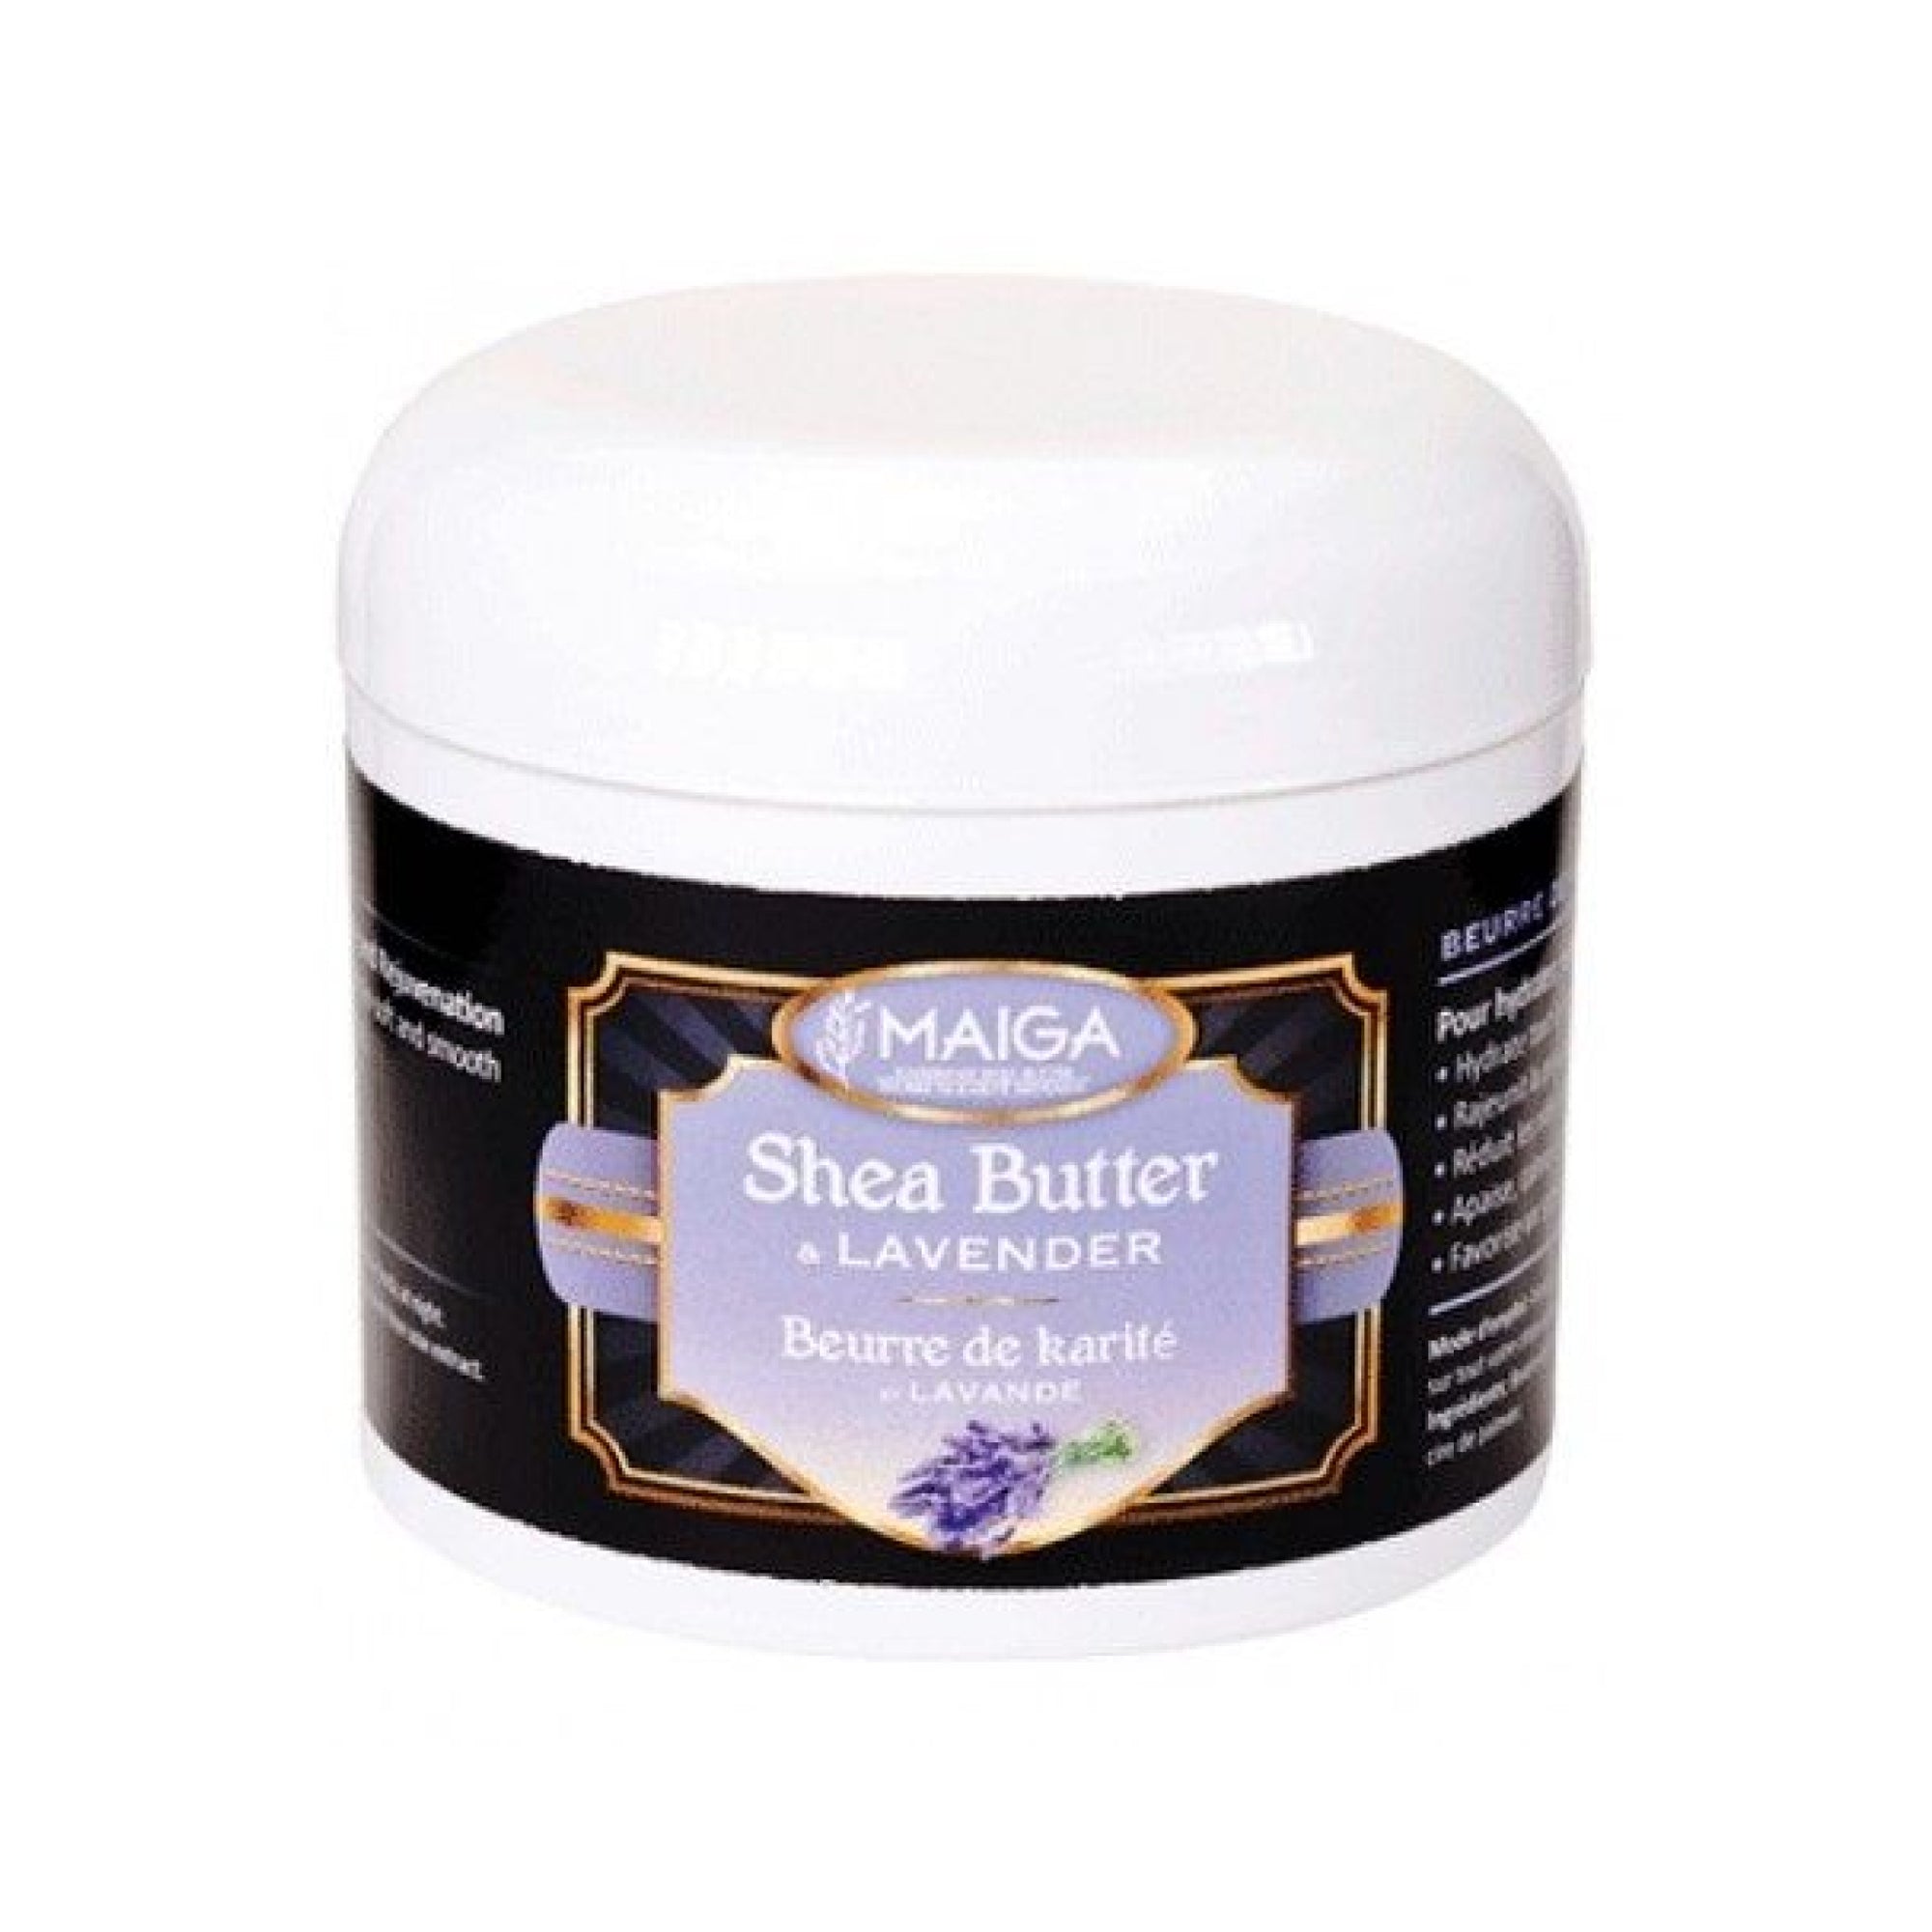 Maiga Shea Butter & Lavender 118ml